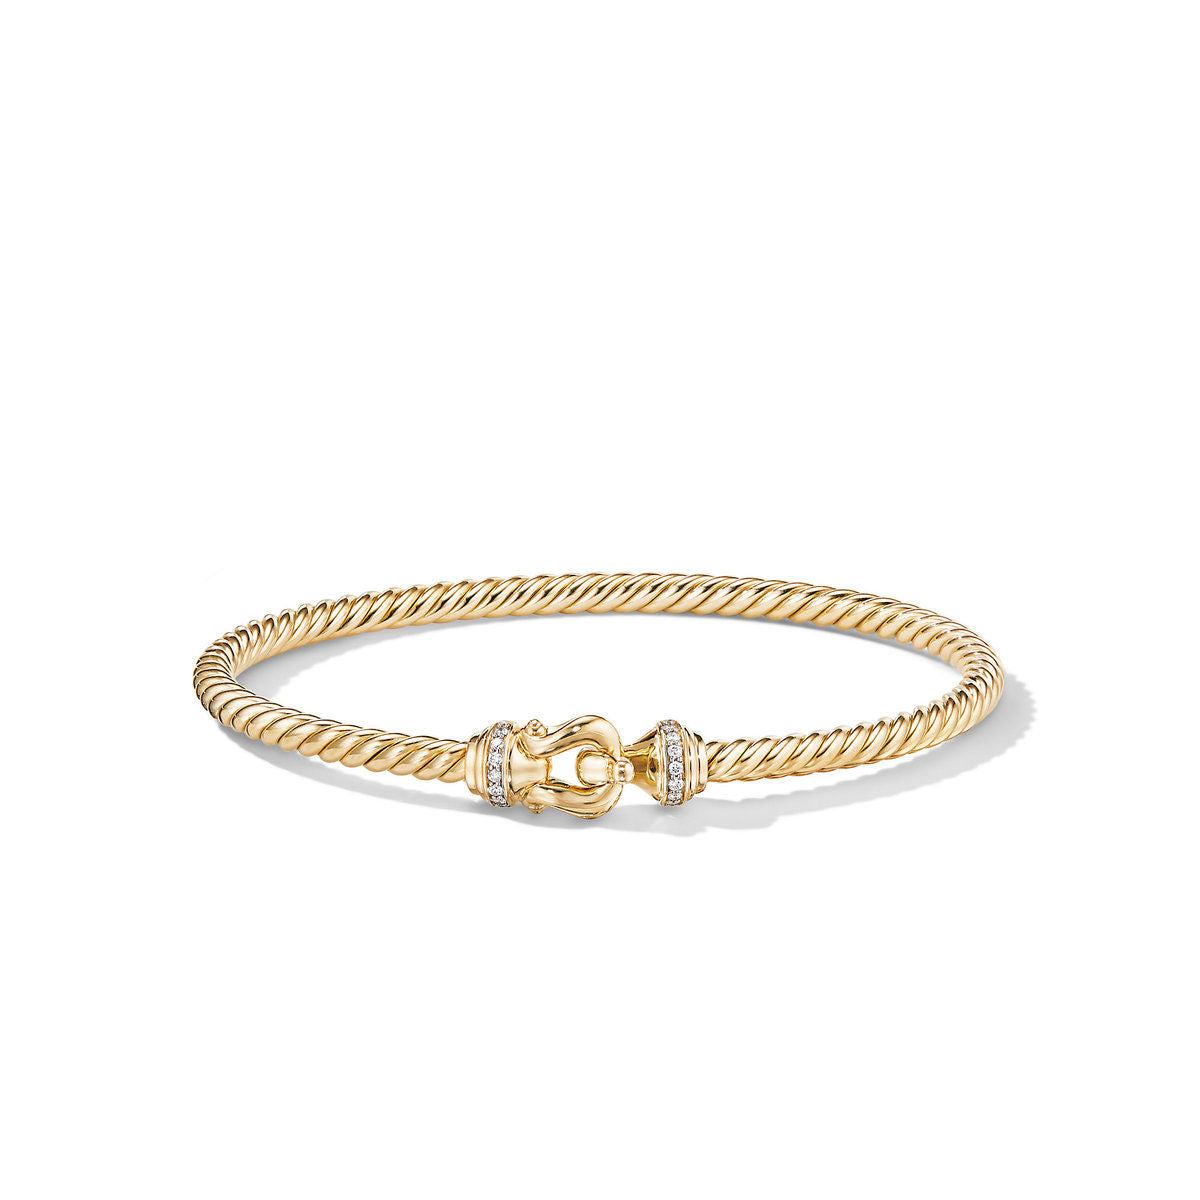 Buckle Bracelet in 18K Yellow Gold with Diamonds